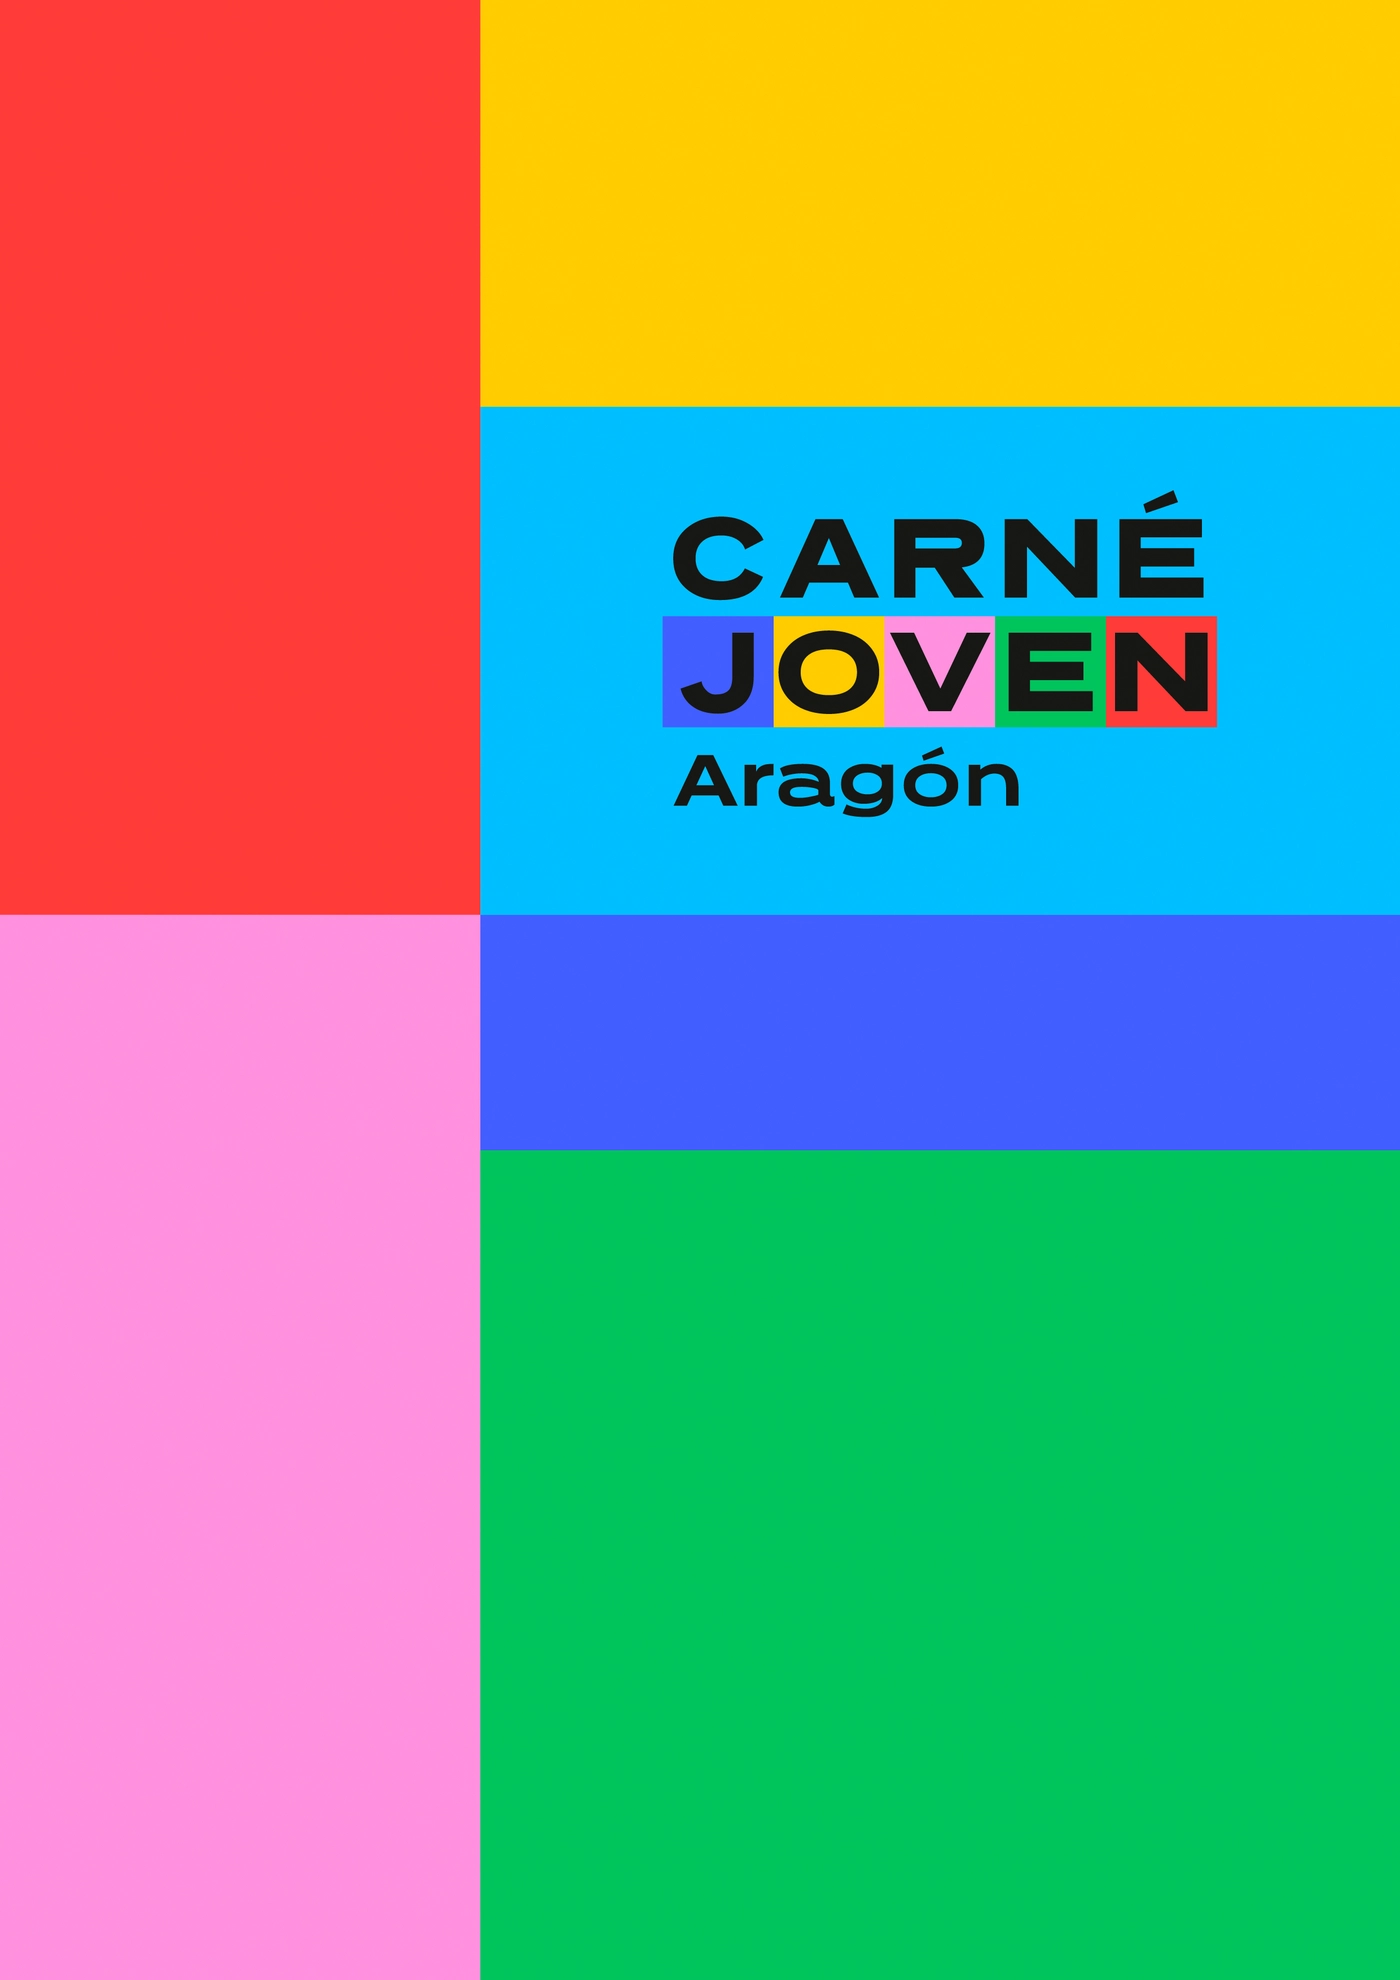 Carné Jóven Aragón by Bambam